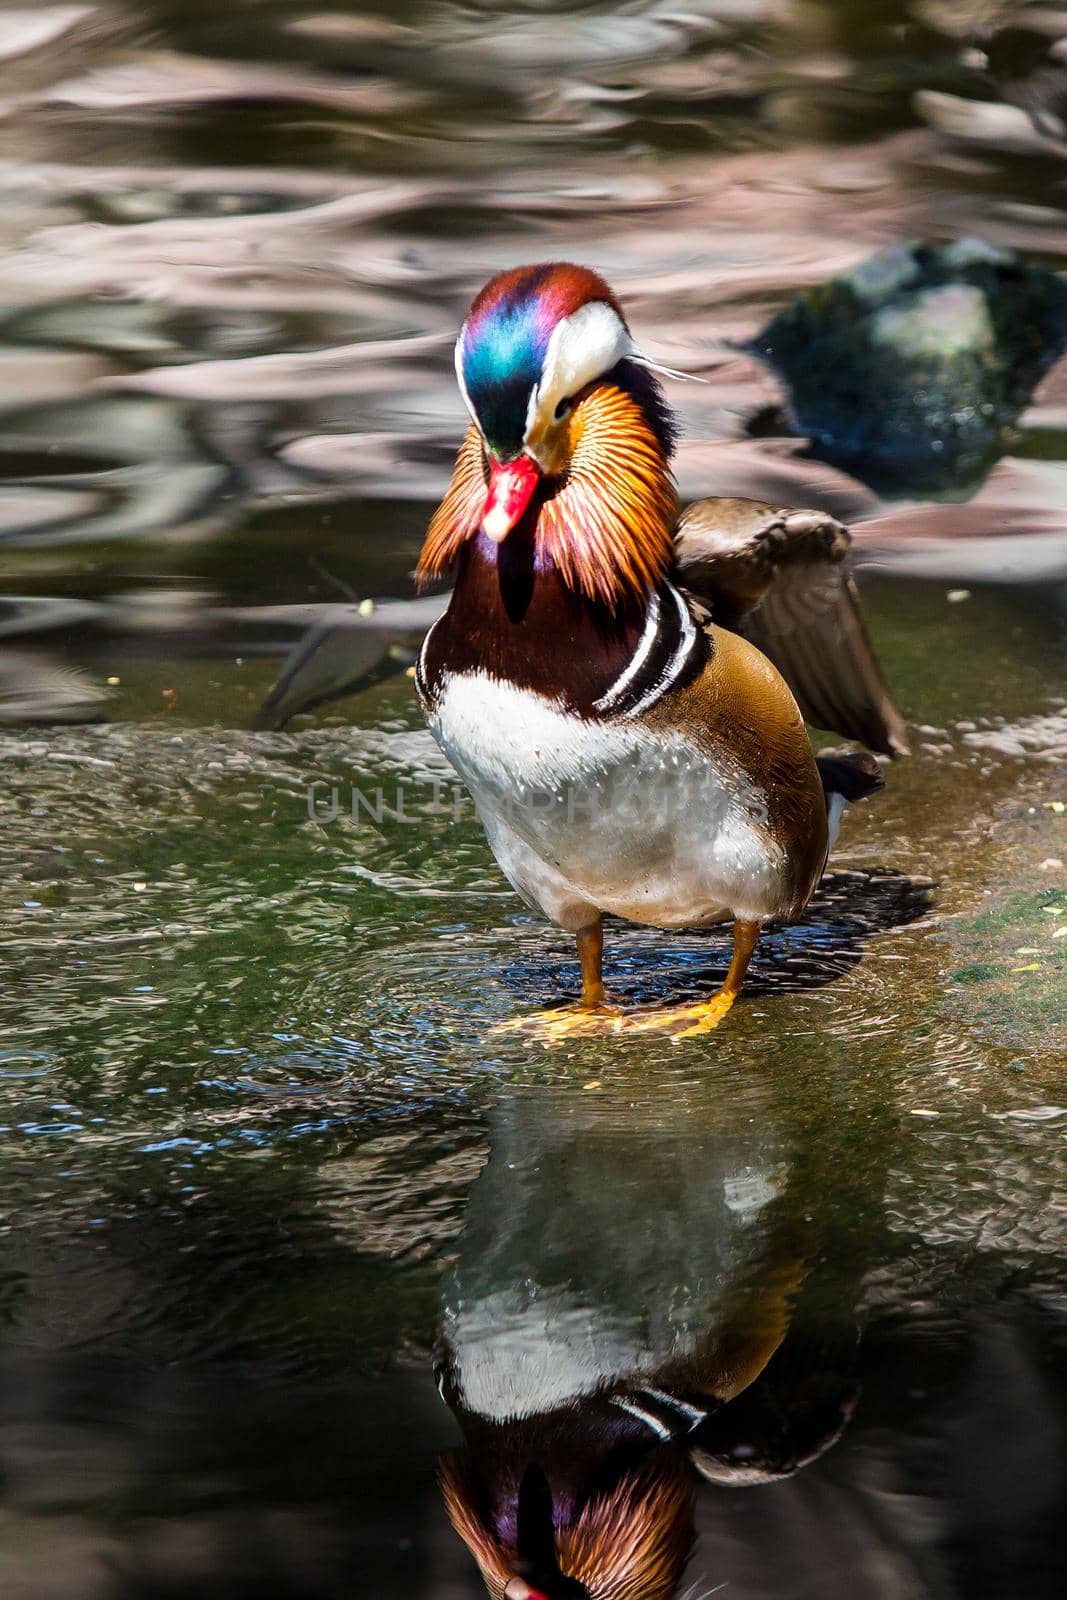 Mandarin duck in the zoo